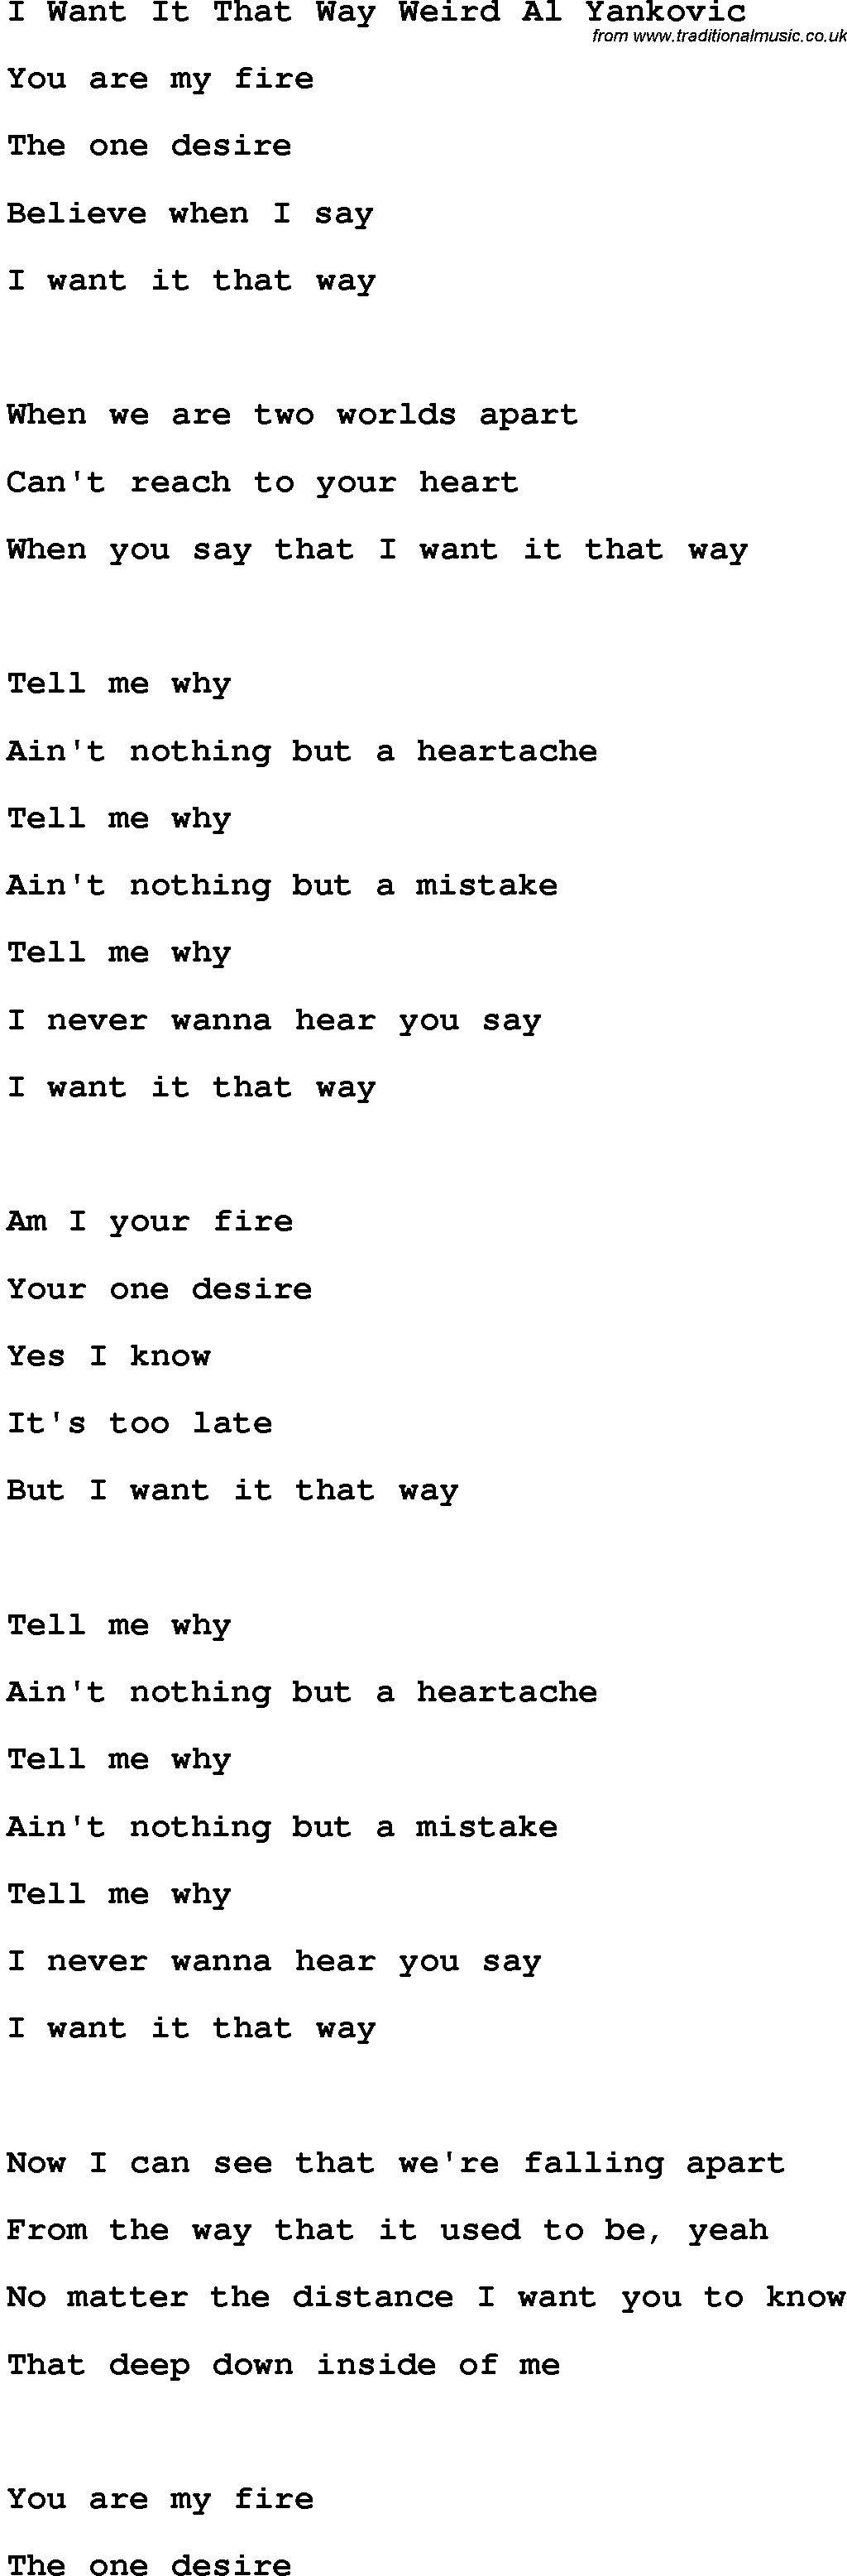 Novelty song: I Want It That Way Weird Al Yankovic lyrics